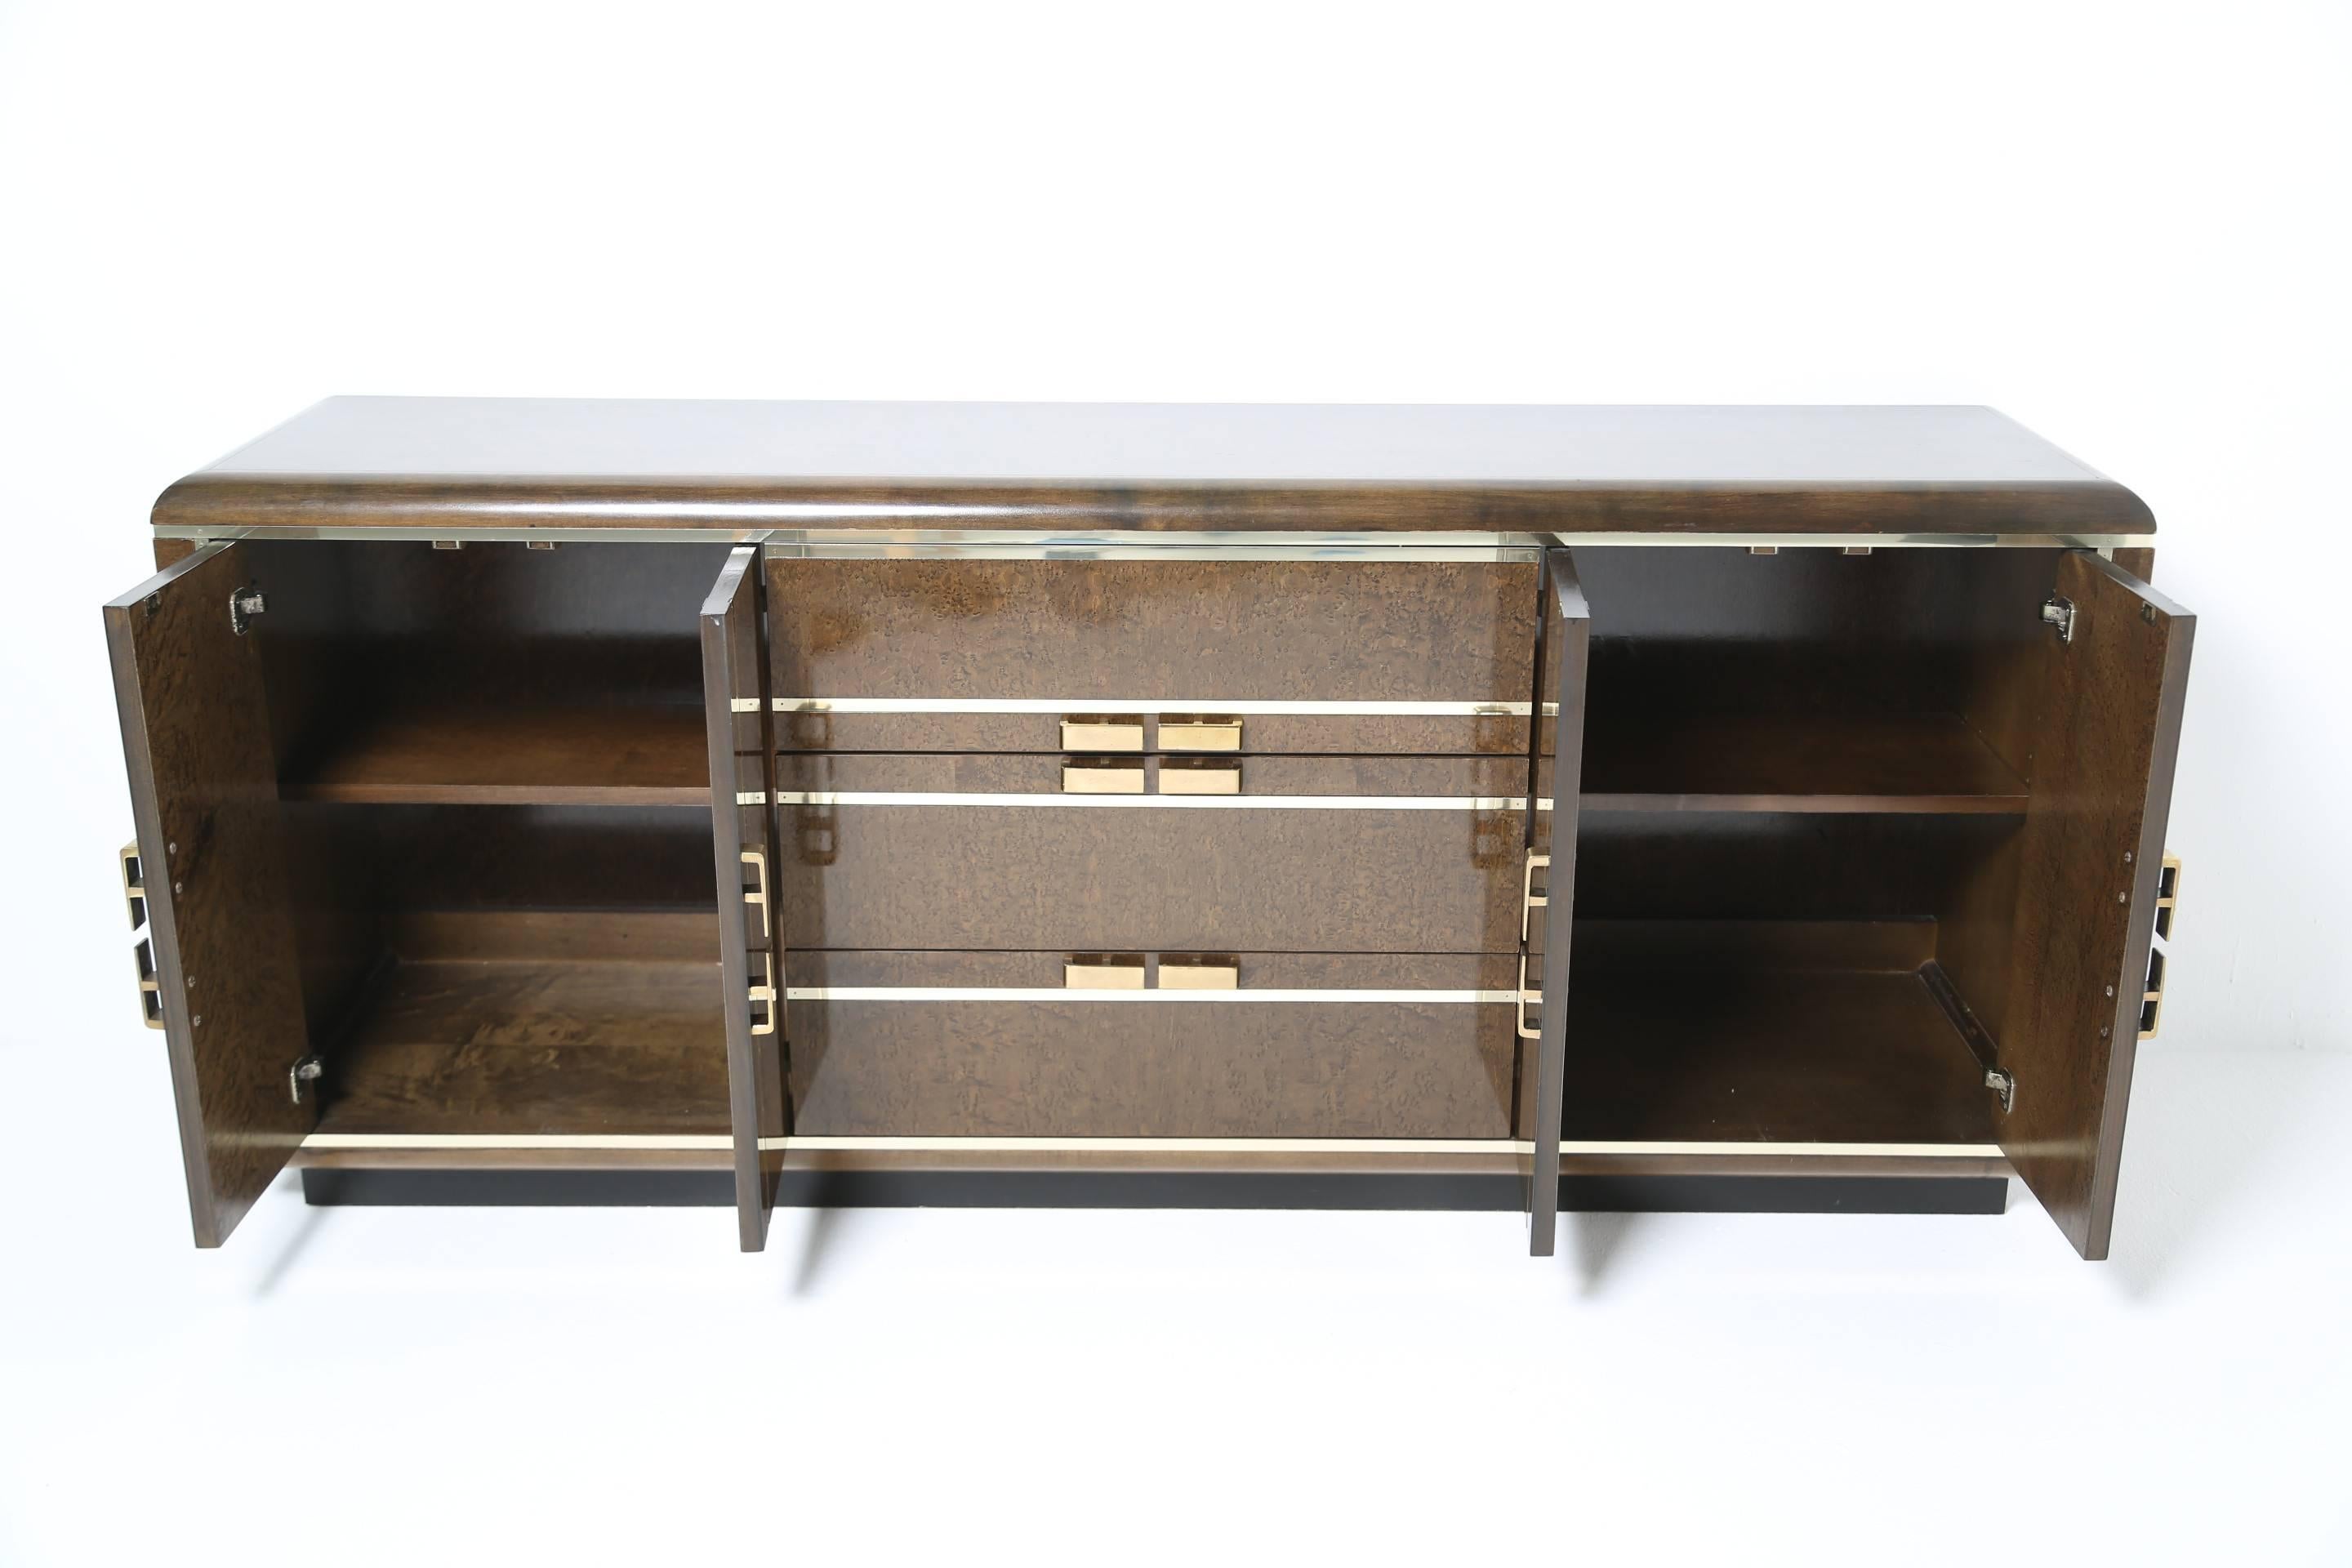 American Romweber burlwood and brass sideboard in an art deco style.